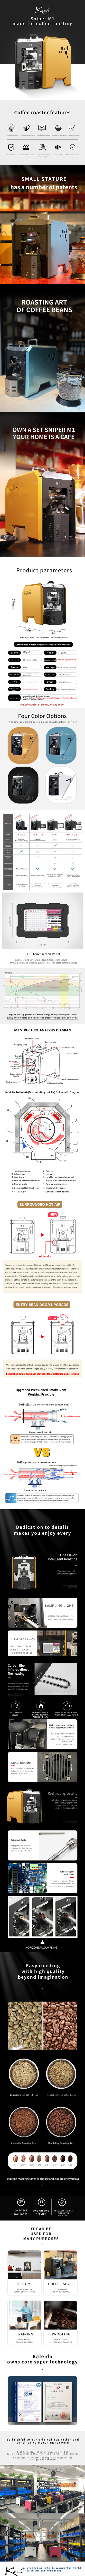 coffee bean roasting house